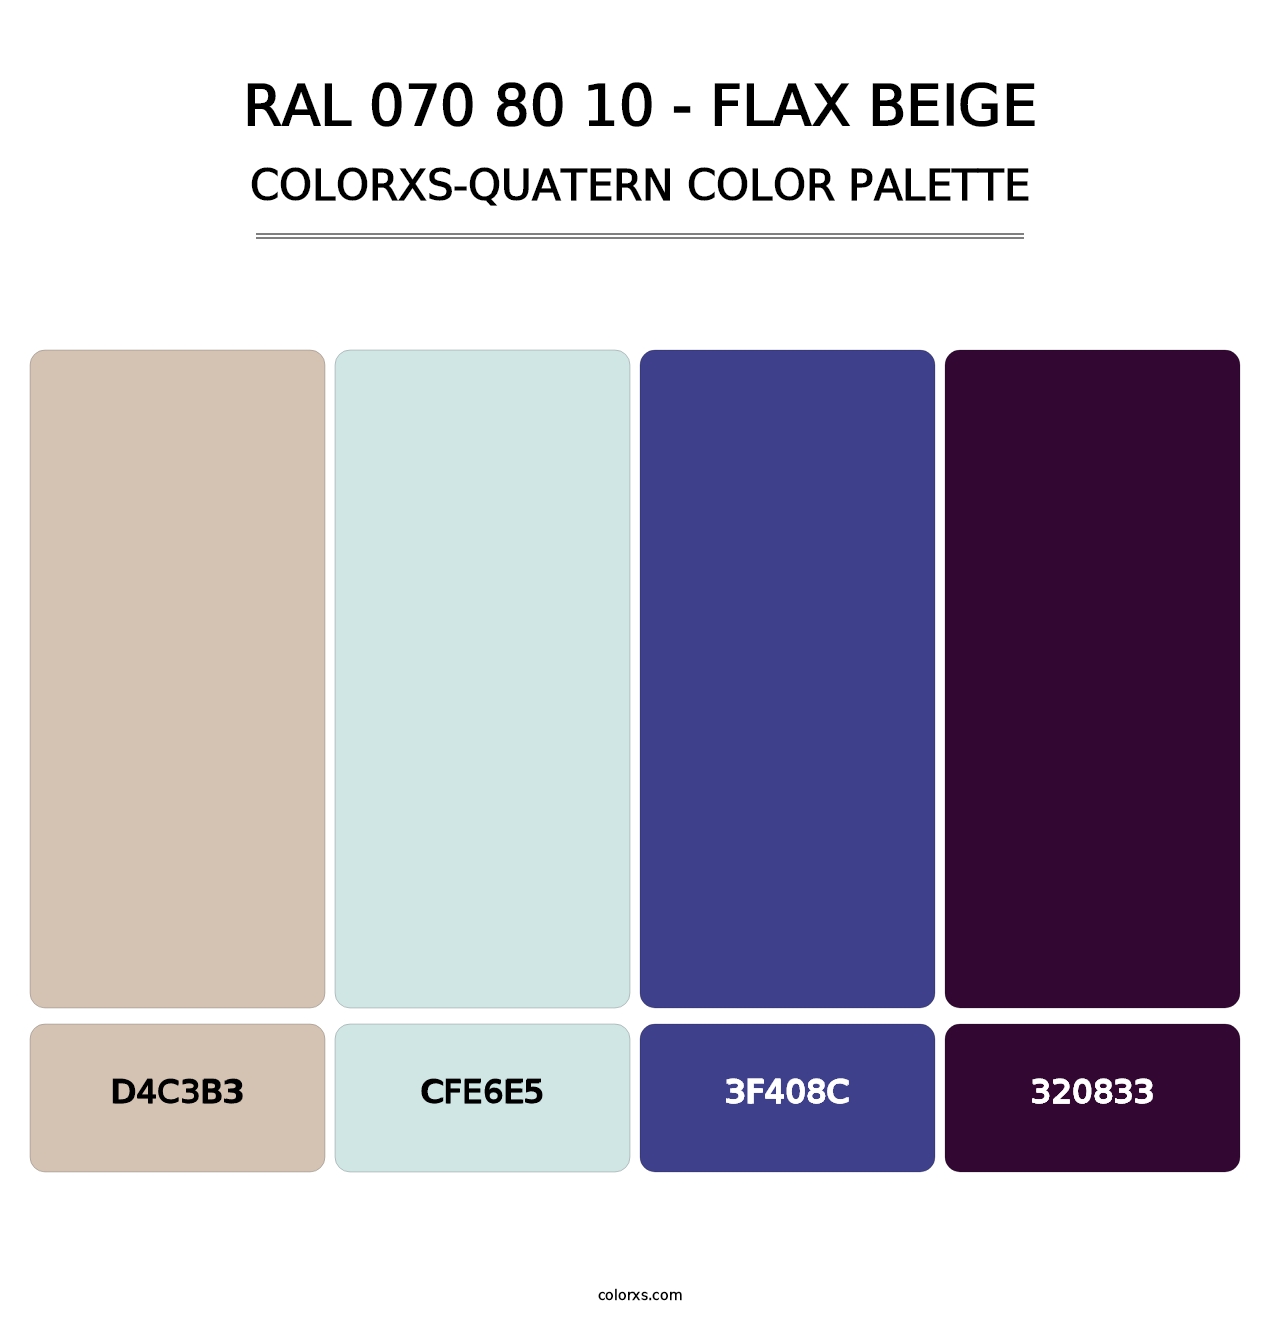 RAL 070 80 10 - Flax Beige - Colorxs Quatern Palette